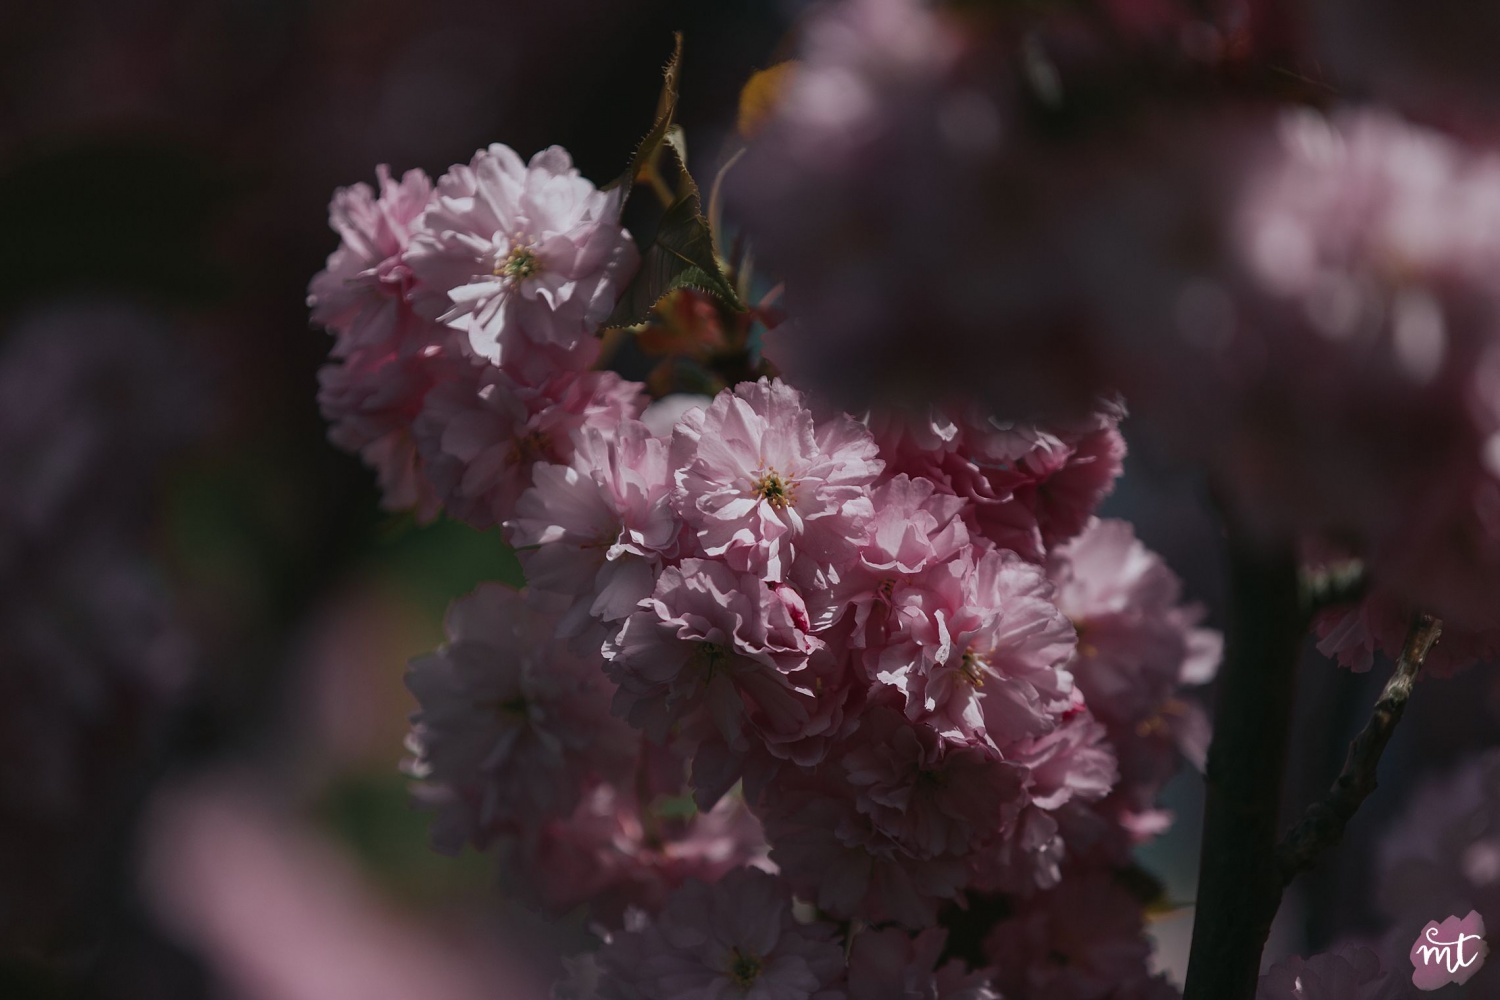 Seasons, Summer, Natural Light, UK Photographer, Real Life, Mother Nature, Cherry Blossom